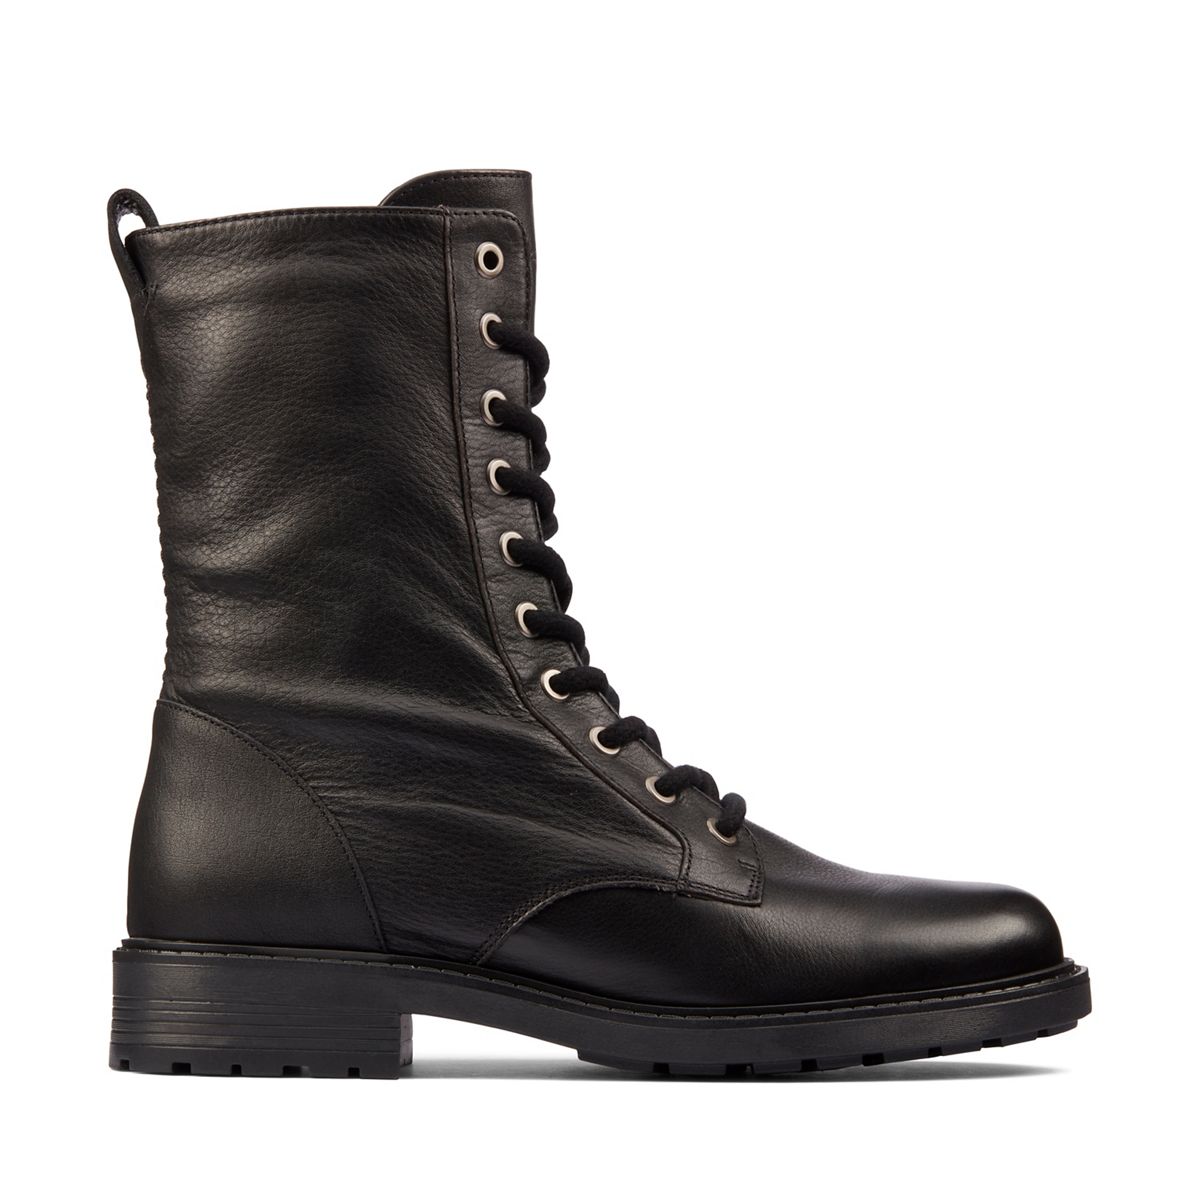 Een deel gangpad ontsmettingsmiddel Orinoco 2 Style Black Leather - Clarks Canada Official Site | Clarks Shoes